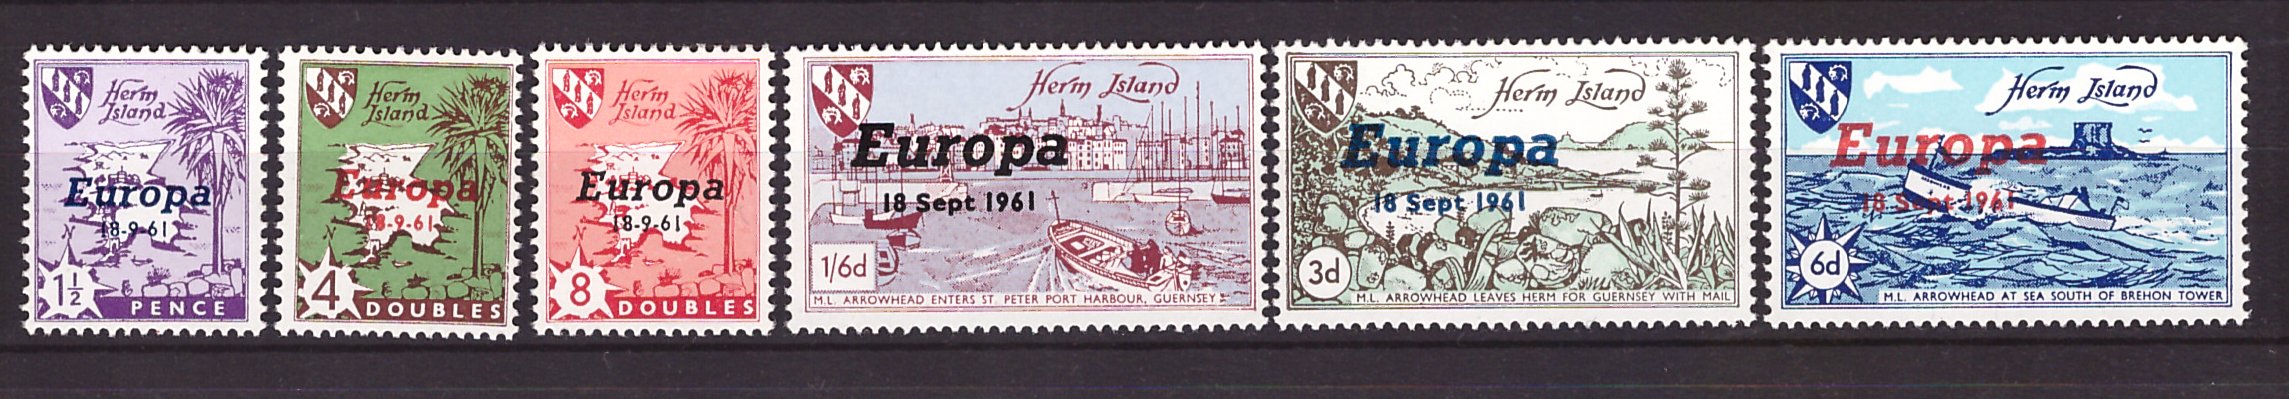 Herm Island 1961 - Europa, supr., serie neuzata